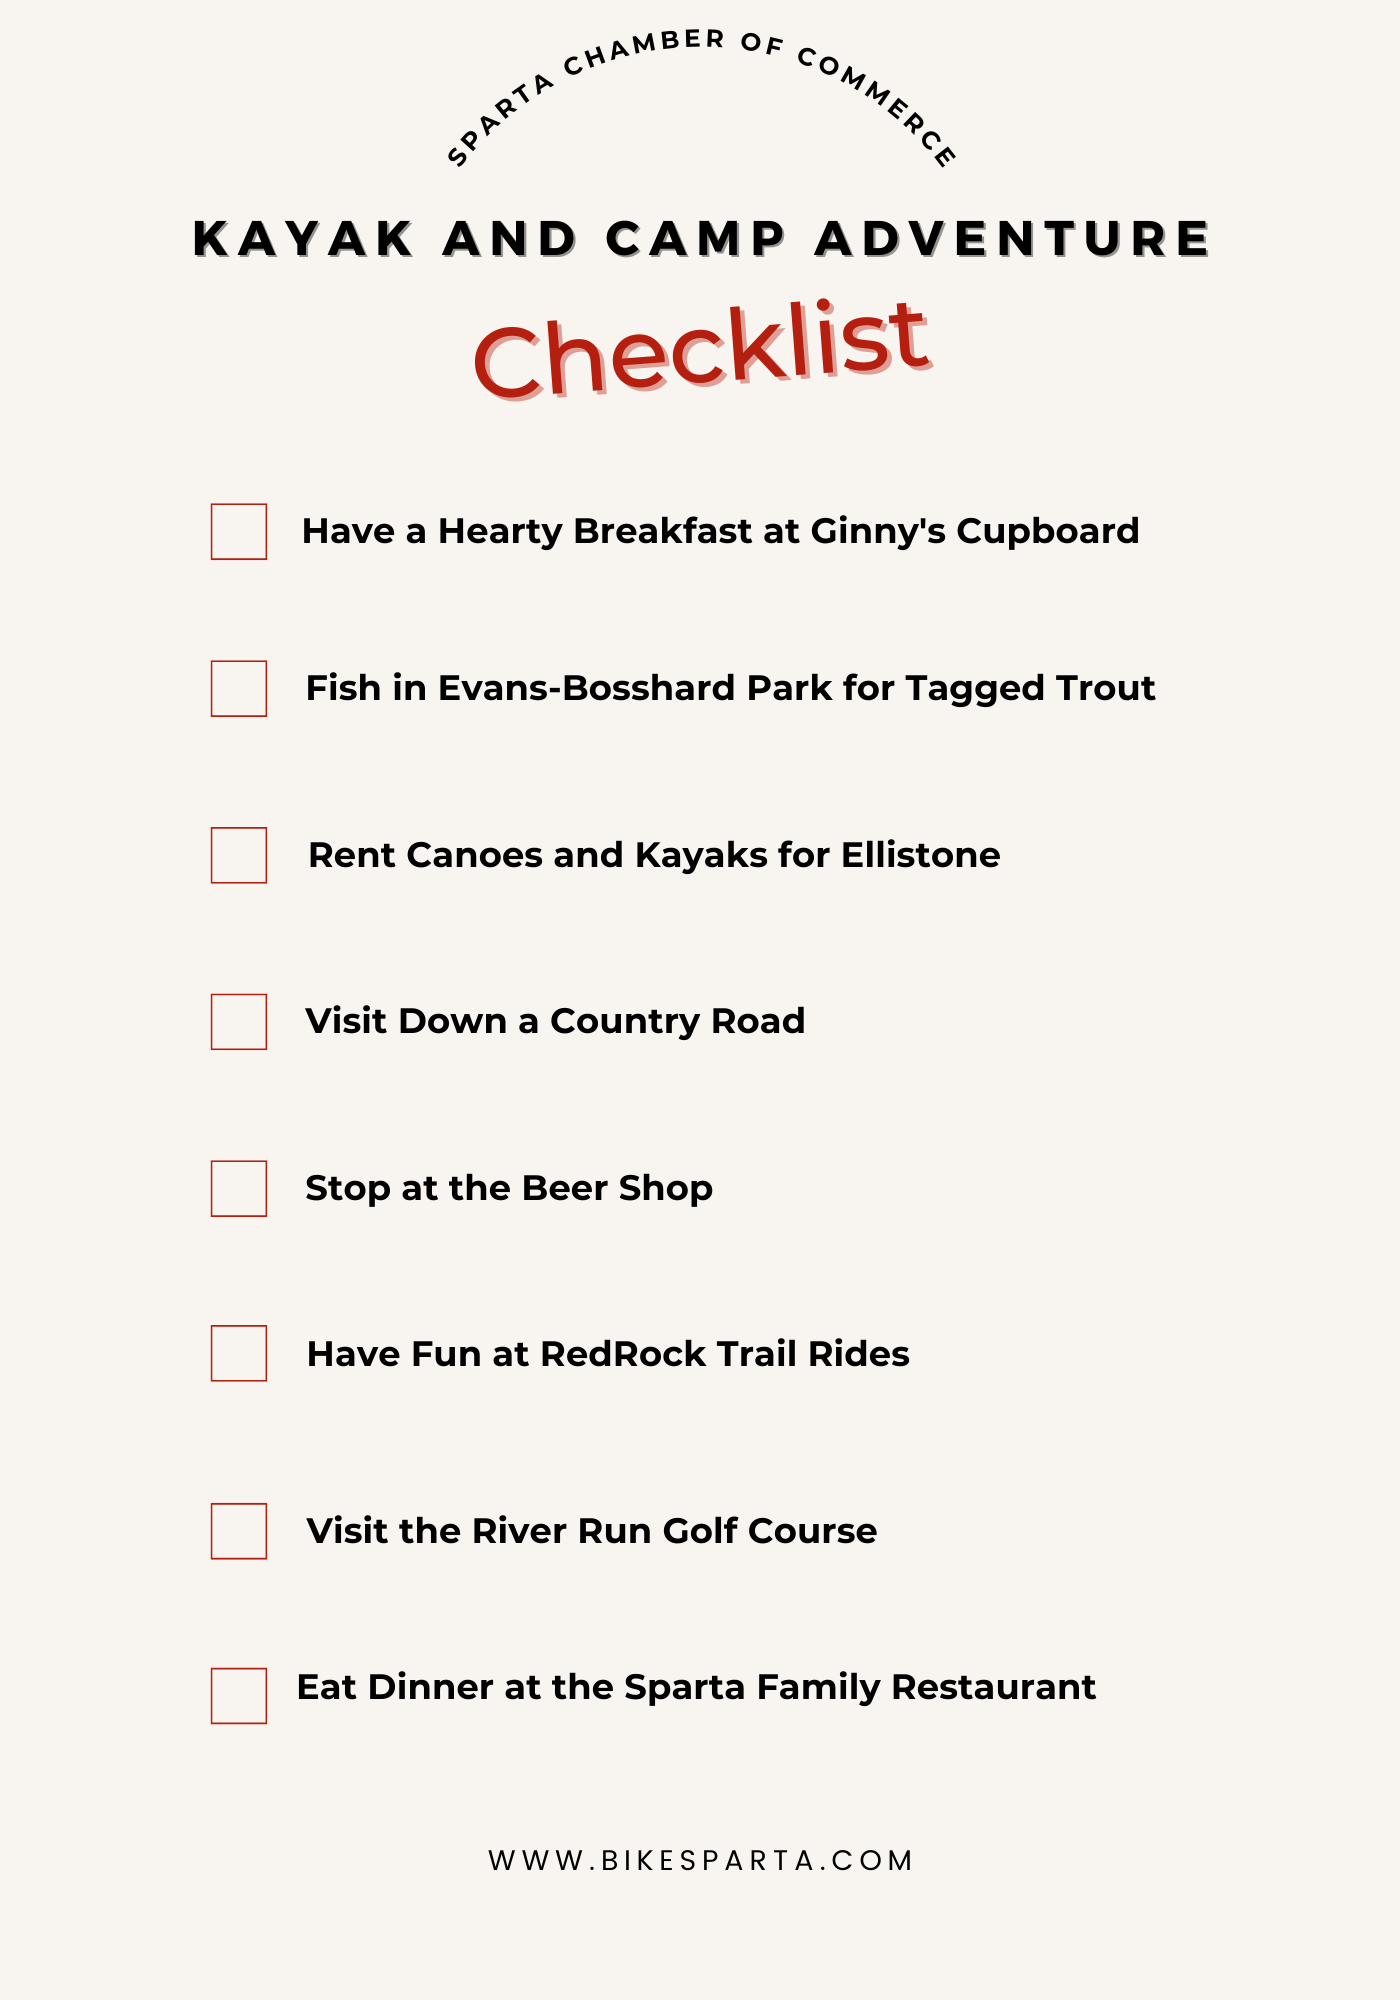 Kayak and Camp Adventure checklist